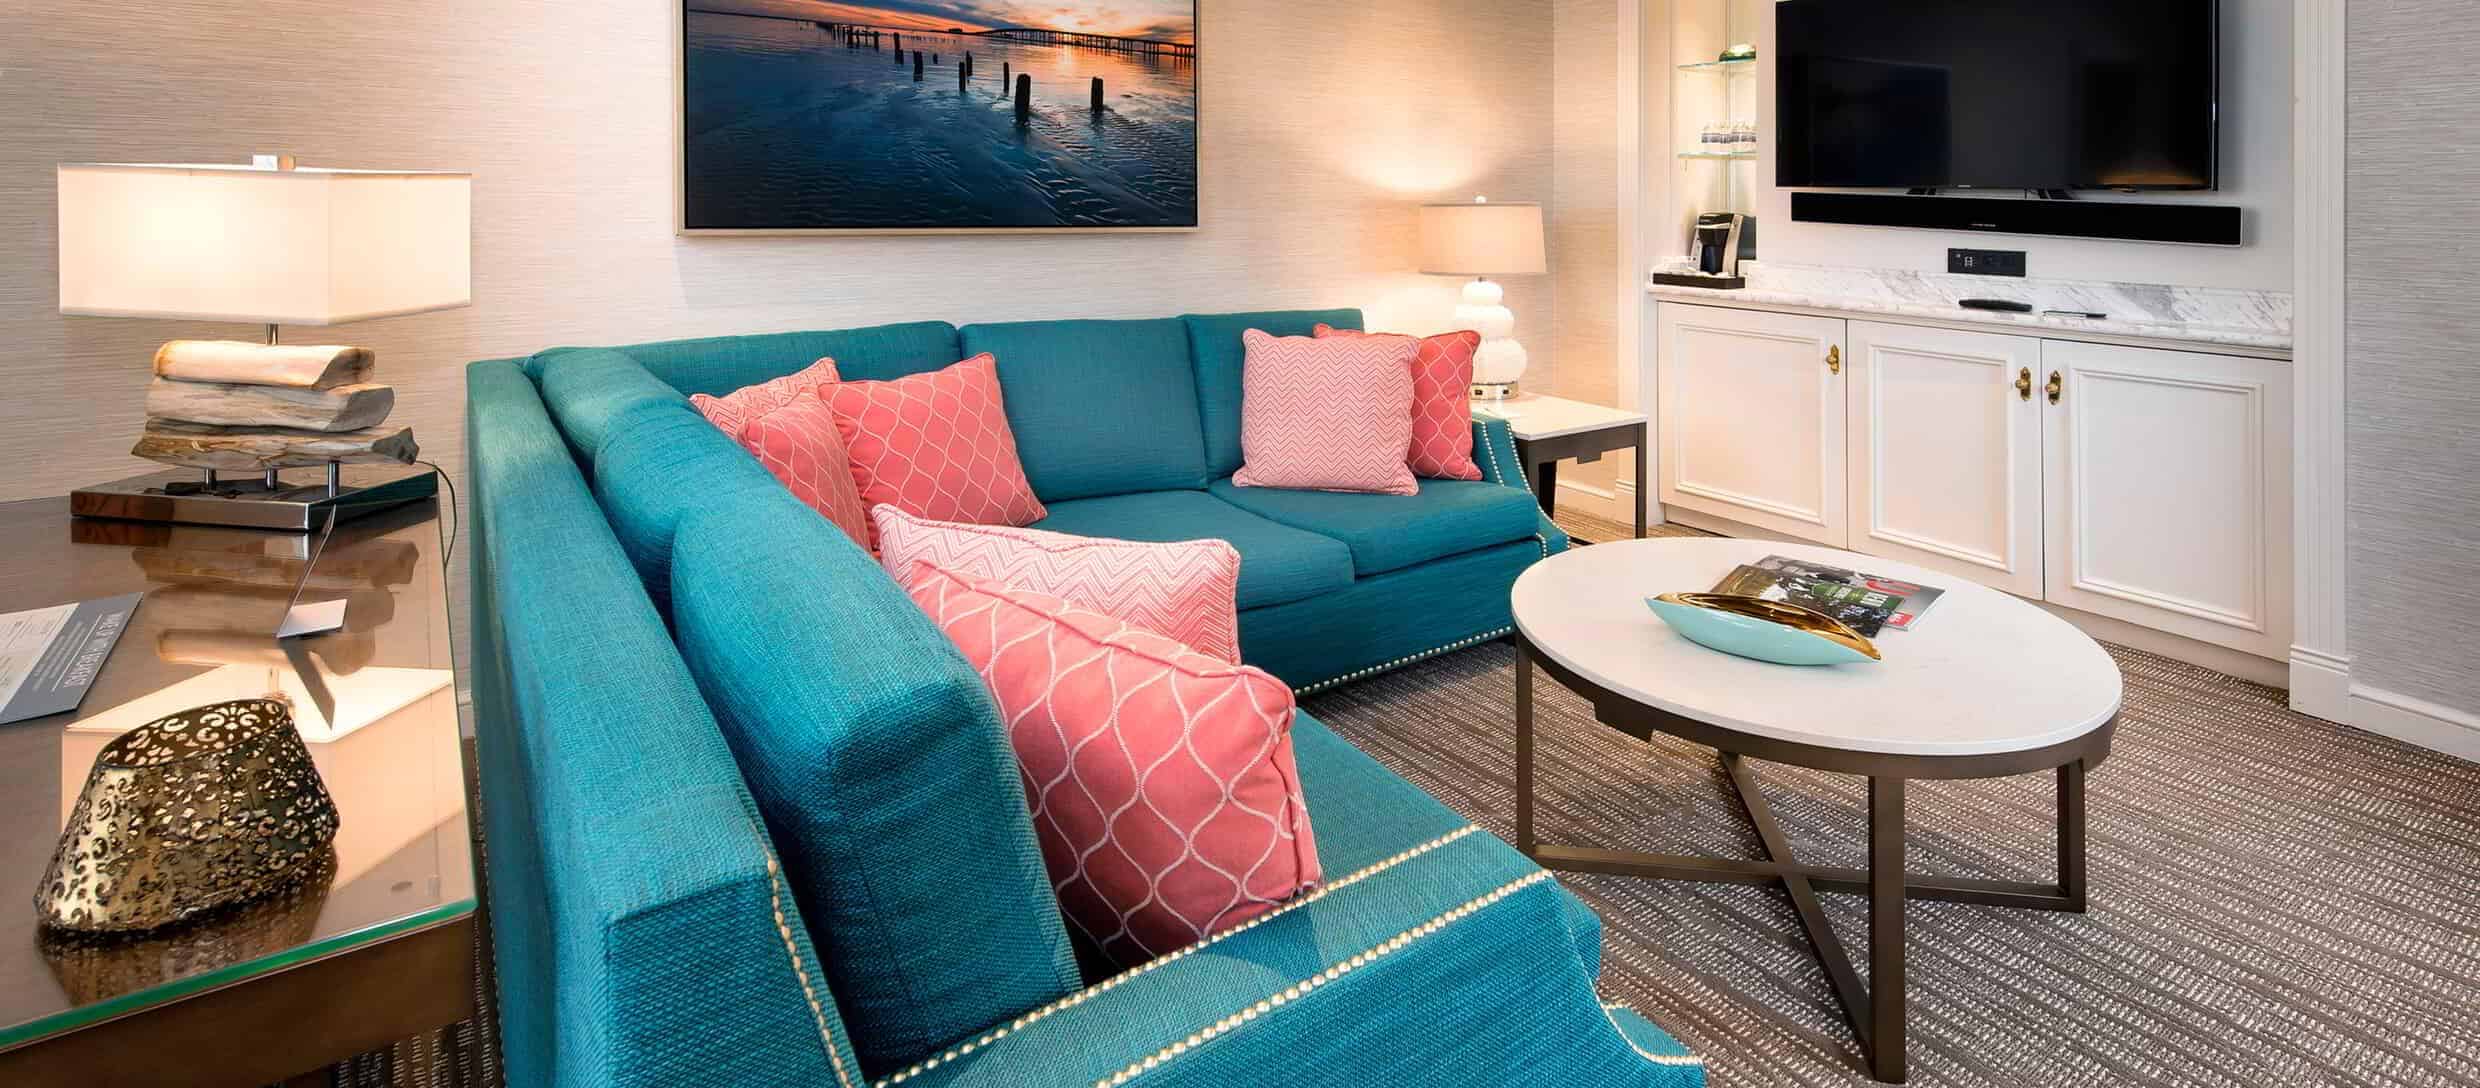 beau-rivage-hotel-jasmine-suite-living-room.jpg.image.2480.1088.high